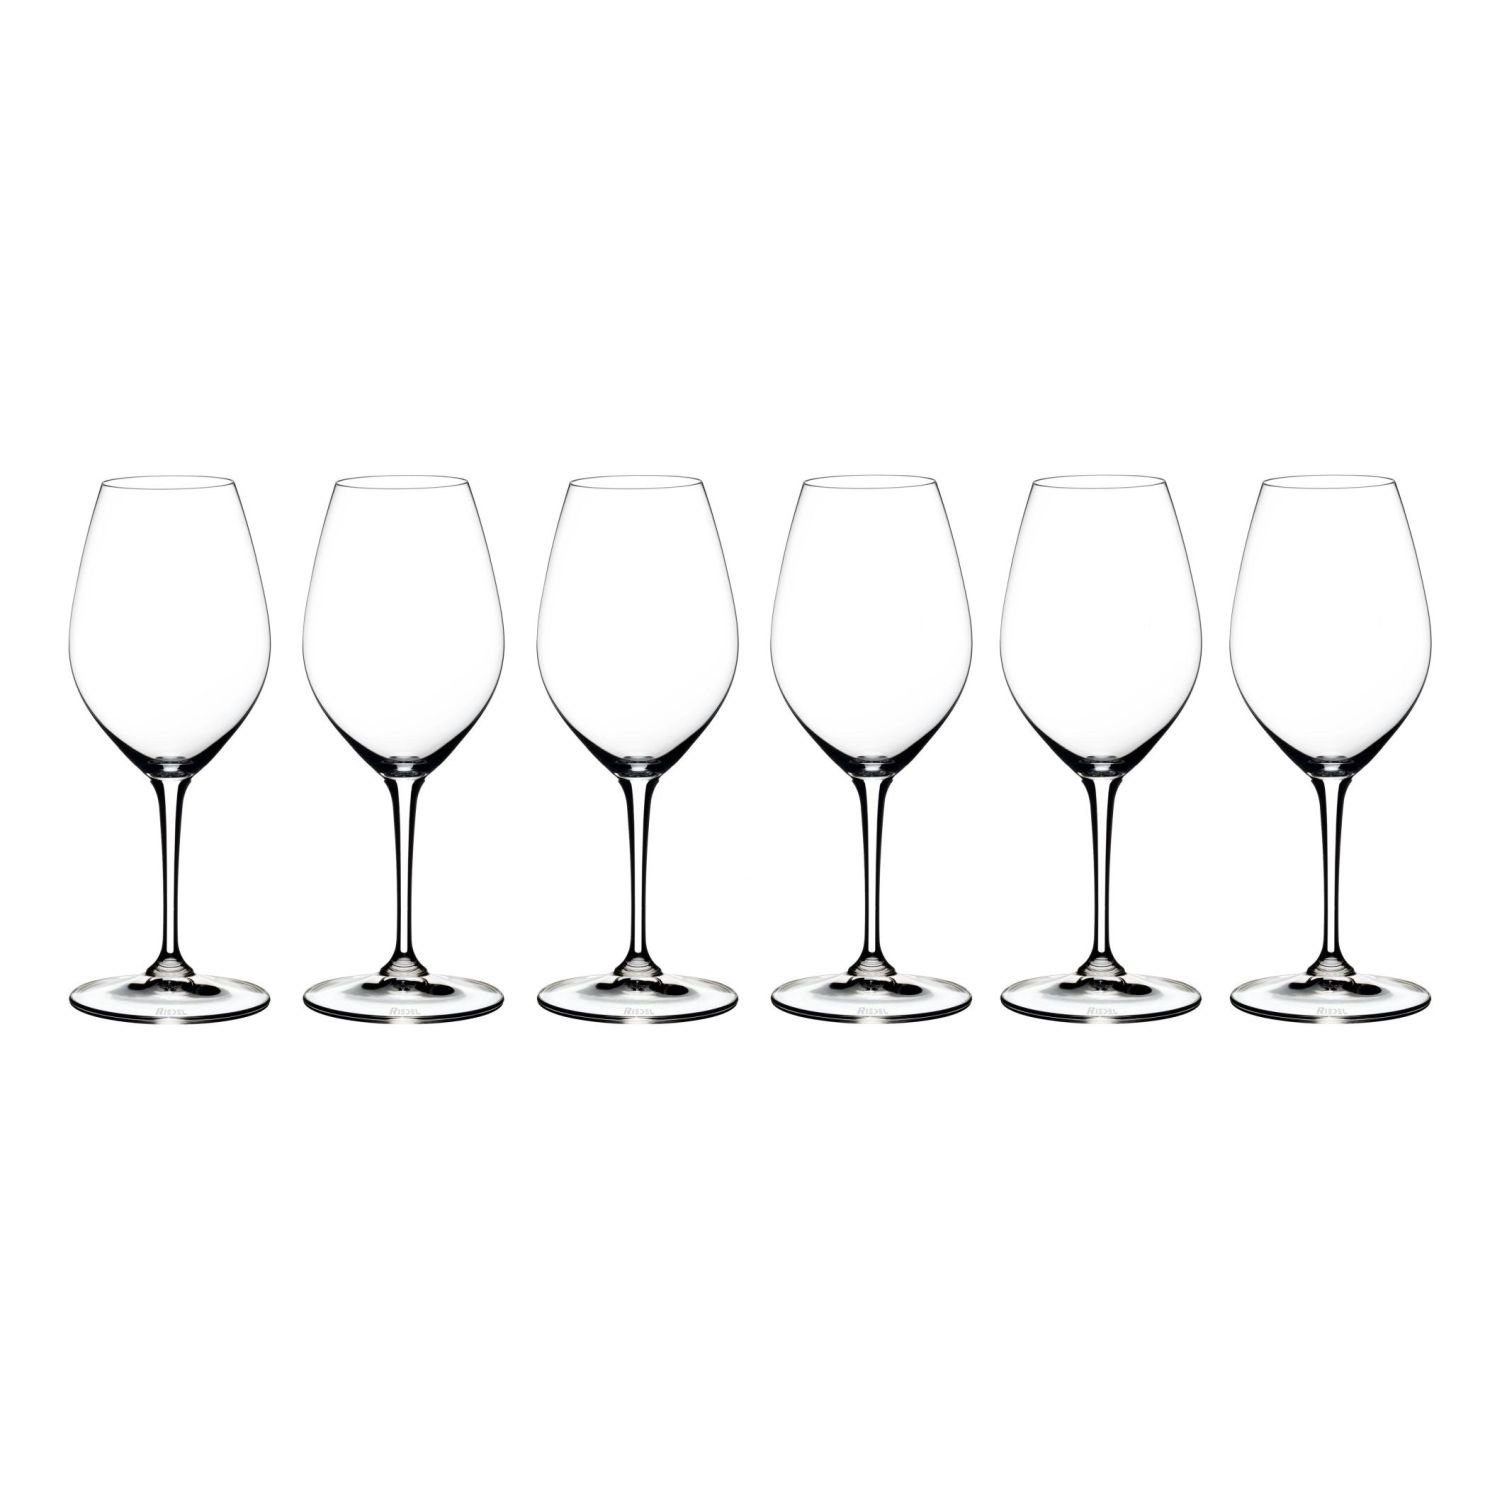 RIEDEL THE WINE GLASS COMPANY Champagnerglas Vinum Champagner Weinglas, Kristallglas